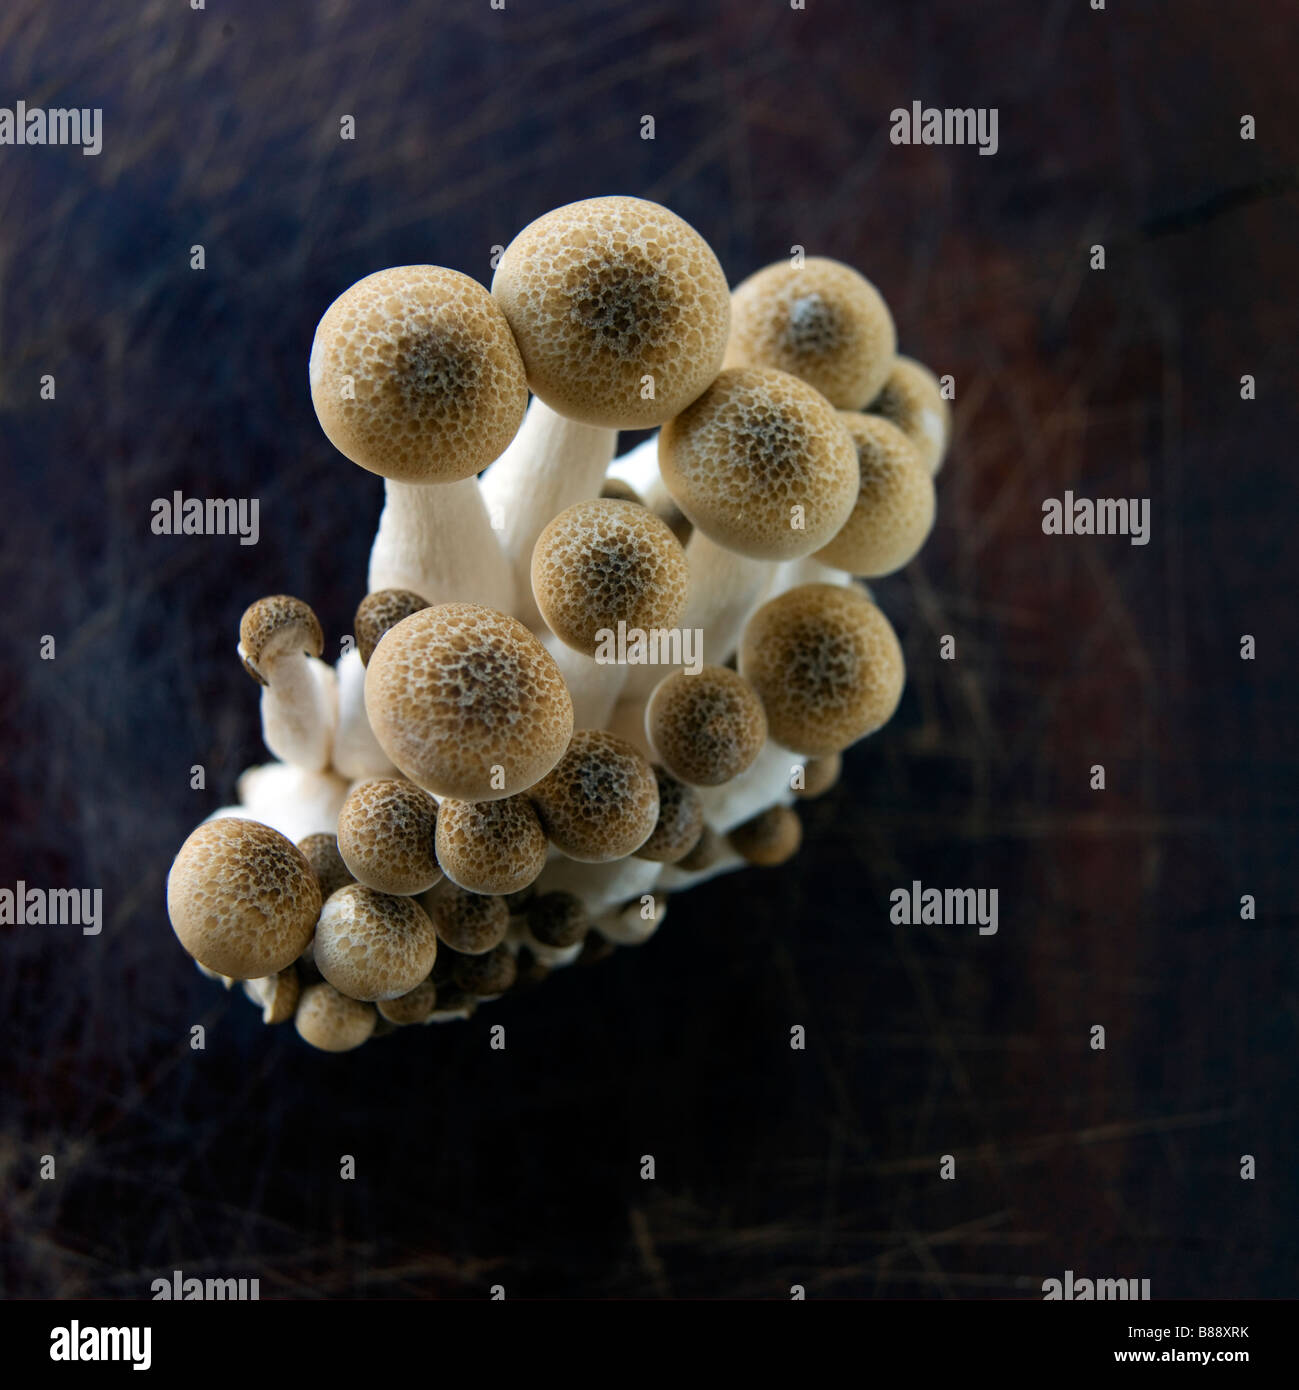 Shimeji mushroom cluster on wooden background Stock Photo